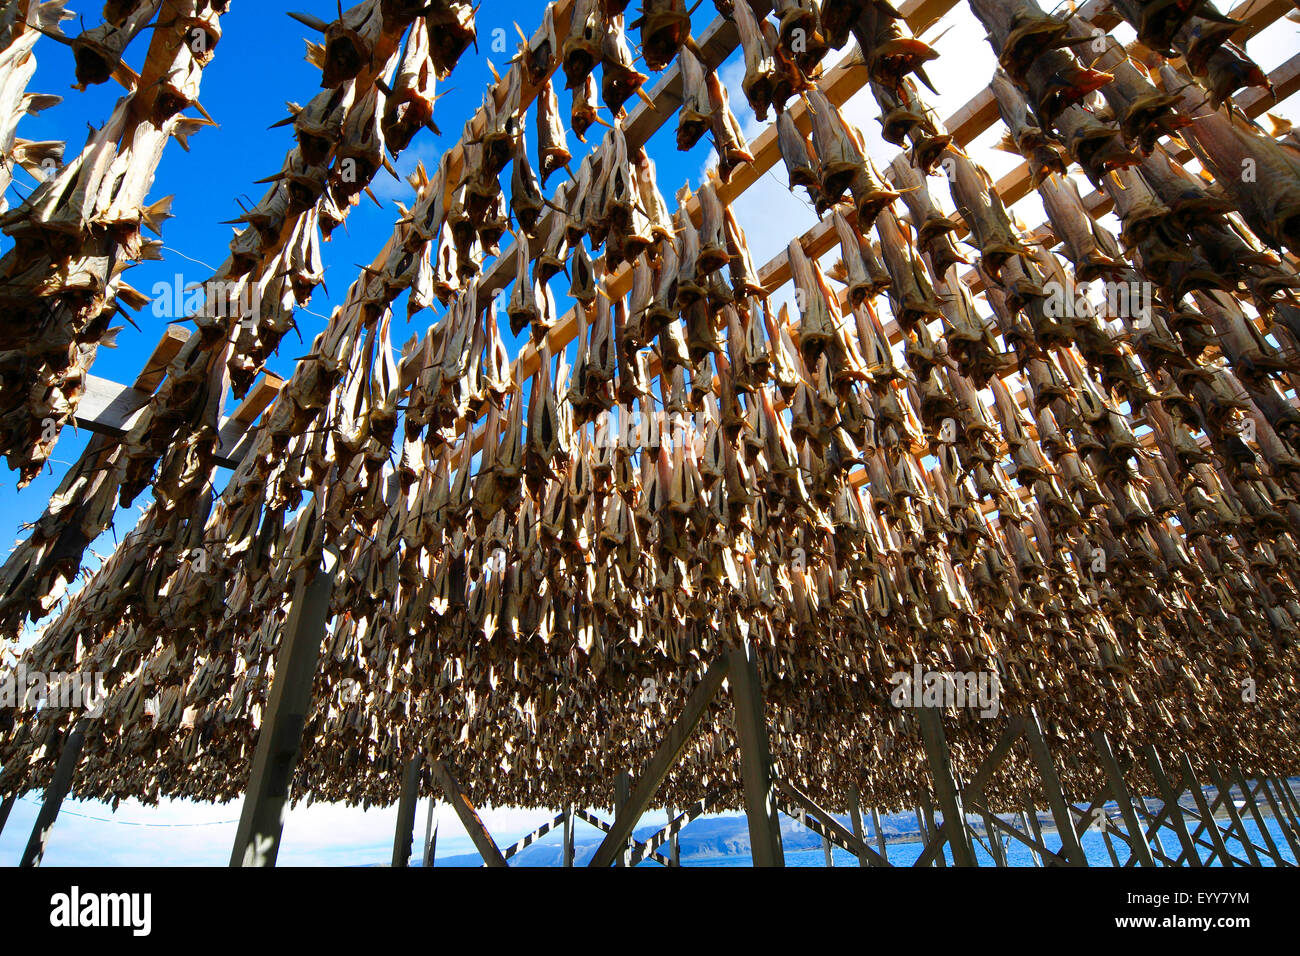 Fish drying on racks, Varangerfjord, Norway - Stock Image - C040/7767 -  Science Photo Library